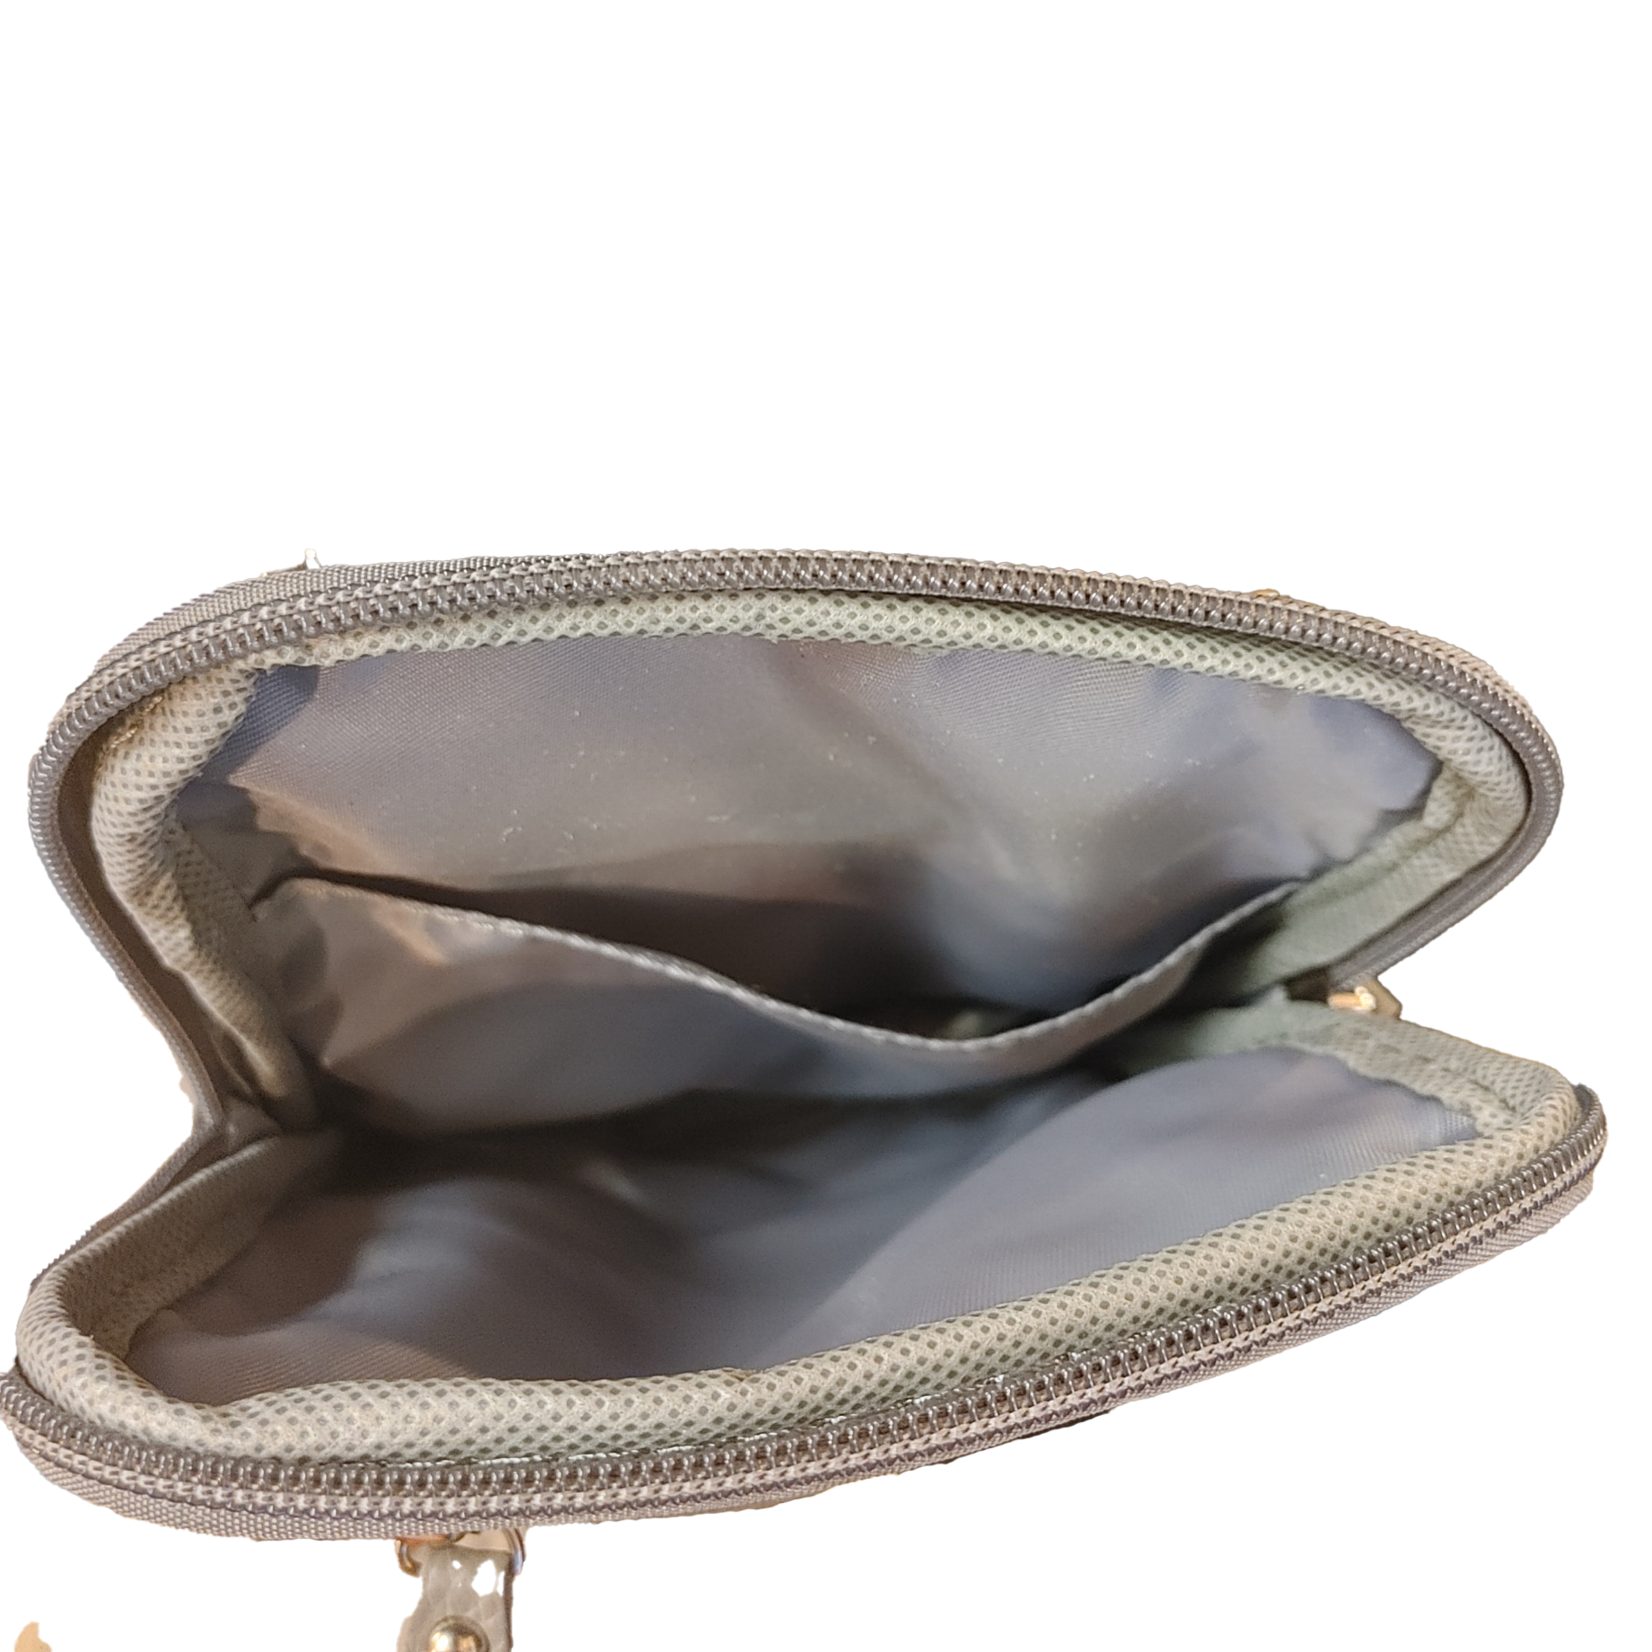 Picabo Picabo travel bag crossbody purse